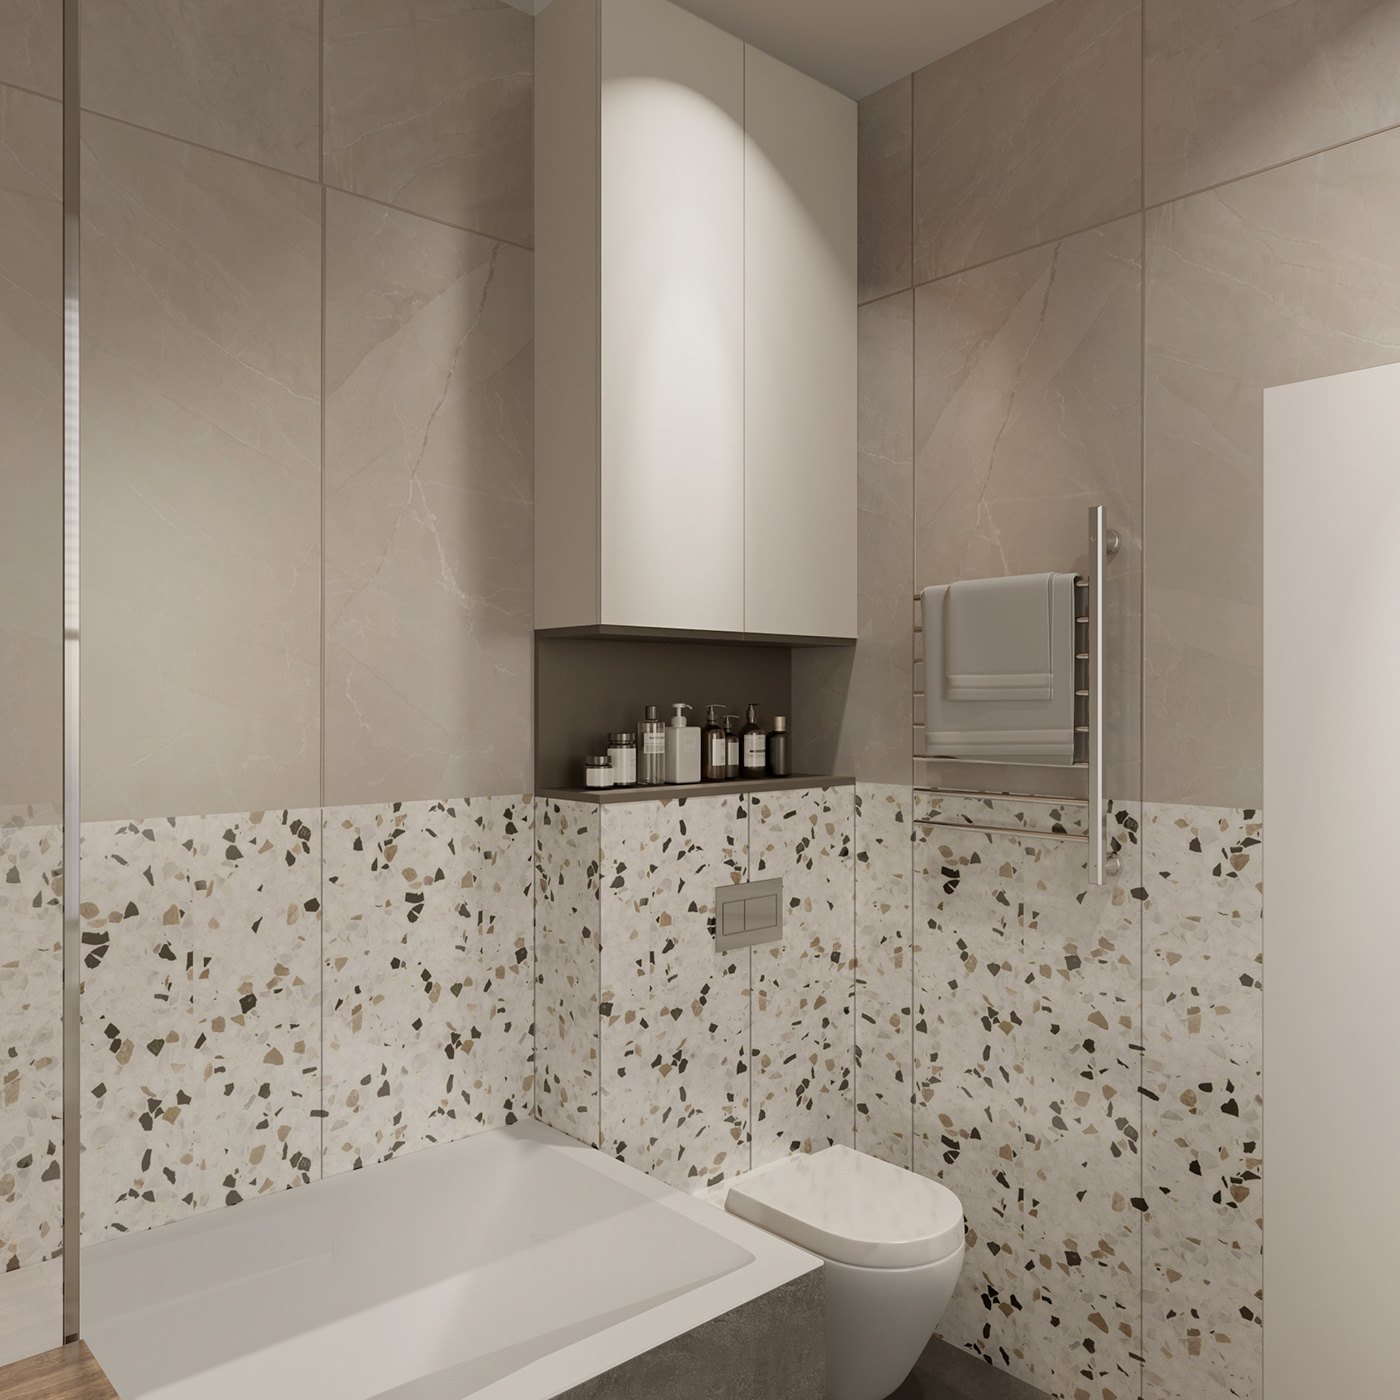 bathroom interior bathroomdesign bathtime interior render Interior Visualization minimal deisgn modern bathroom design дизайн ванной современная ванная